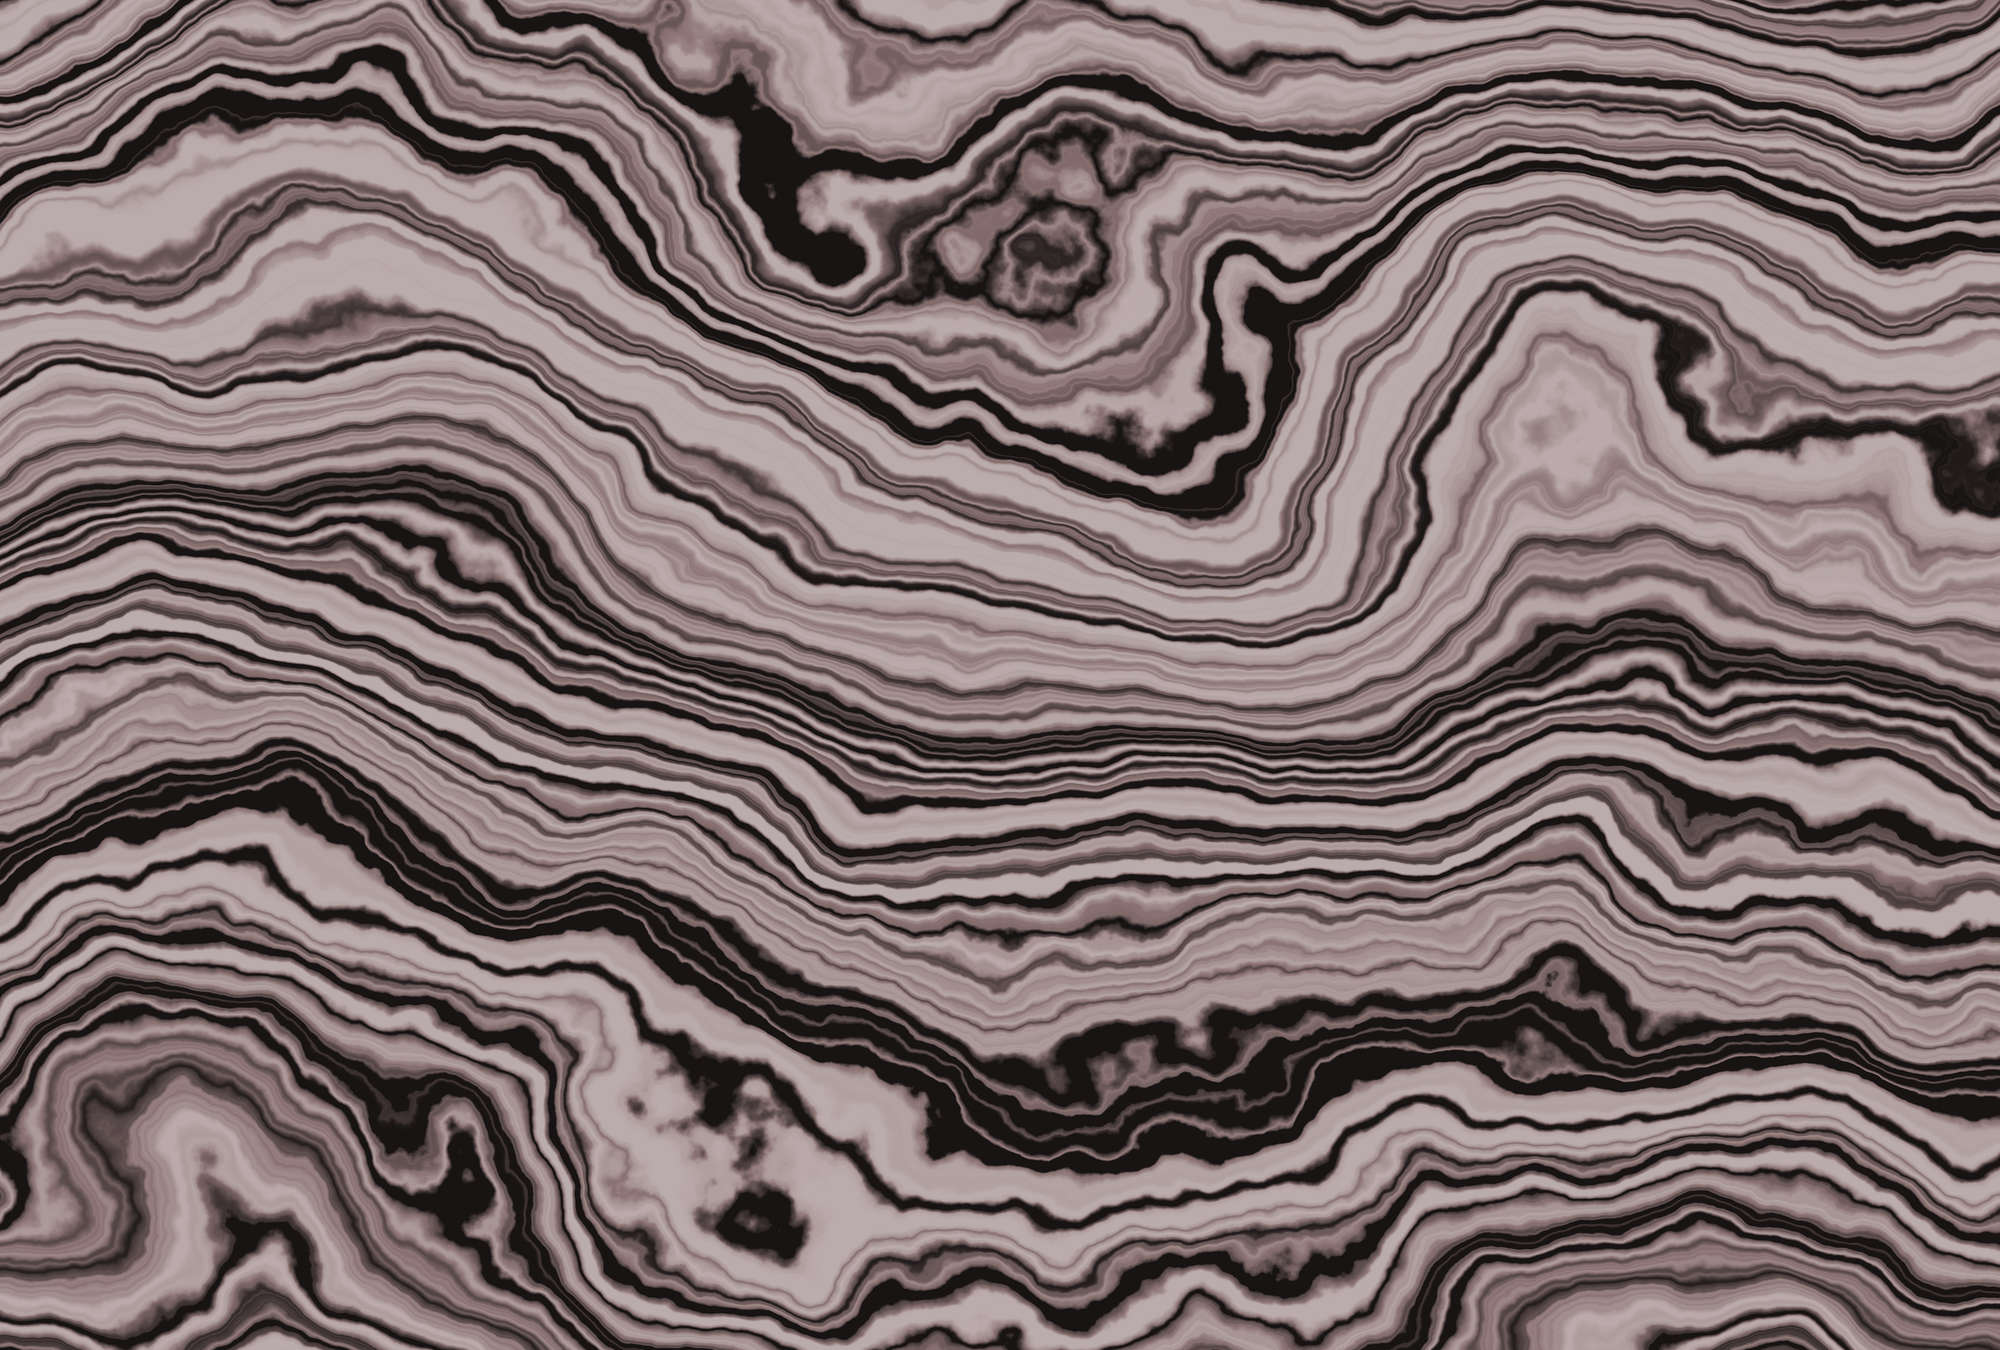             Onyx 3 - Cross section of an onyx marble as photo wallpaper - Pink, Black | Matt smooth fleece
        